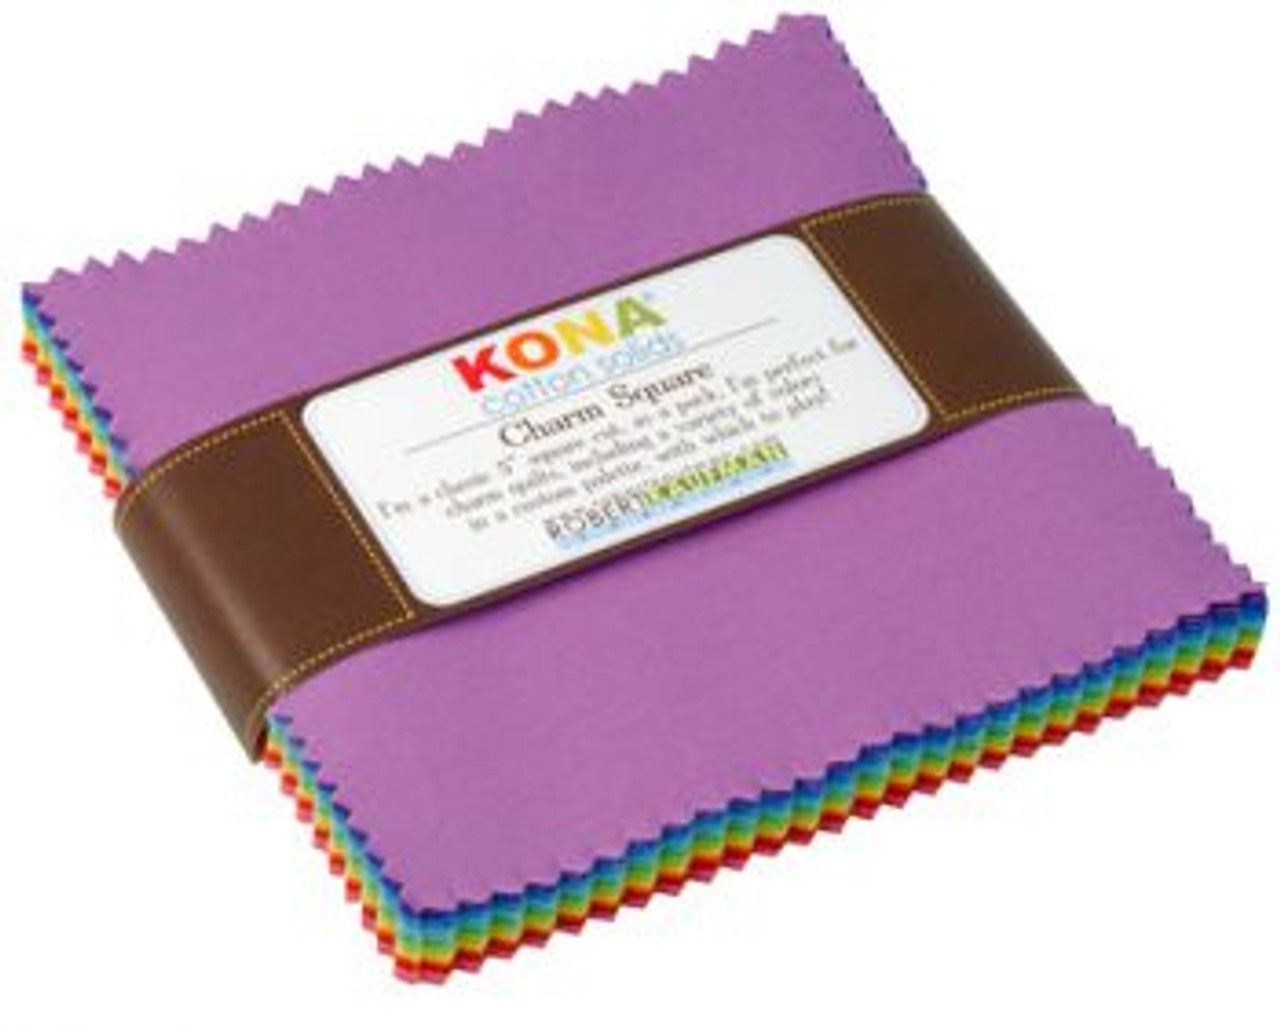 Kona Cotton - New Bright Palette Charm Pack - by Robert Kaufman Fabrics